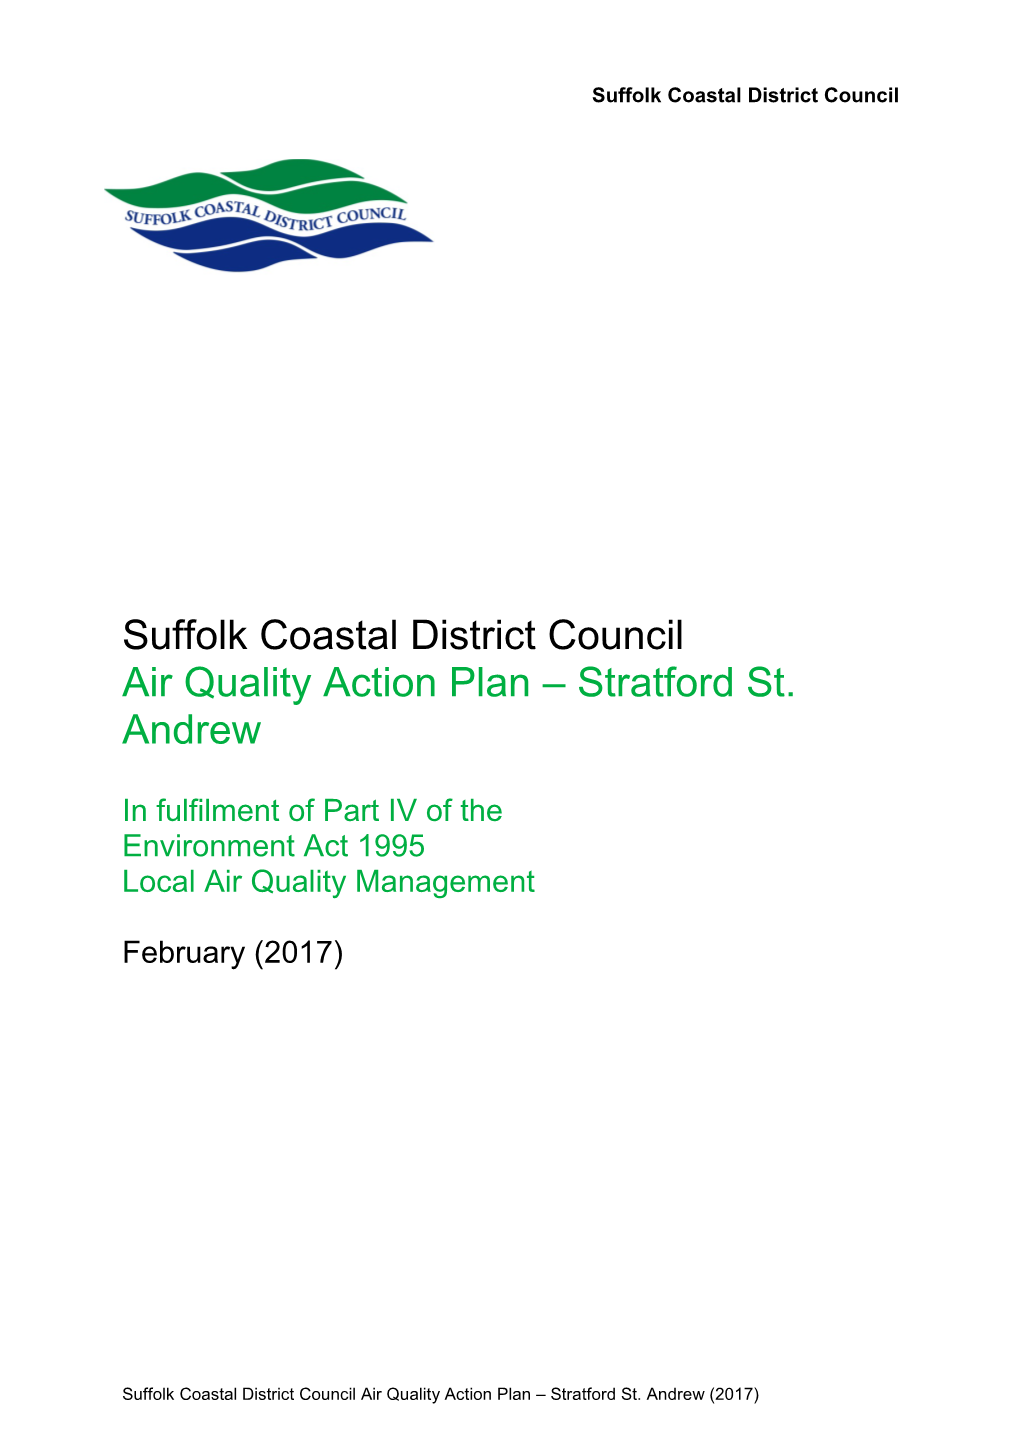 Draft Action Plan for Stratford St Andrew 2017